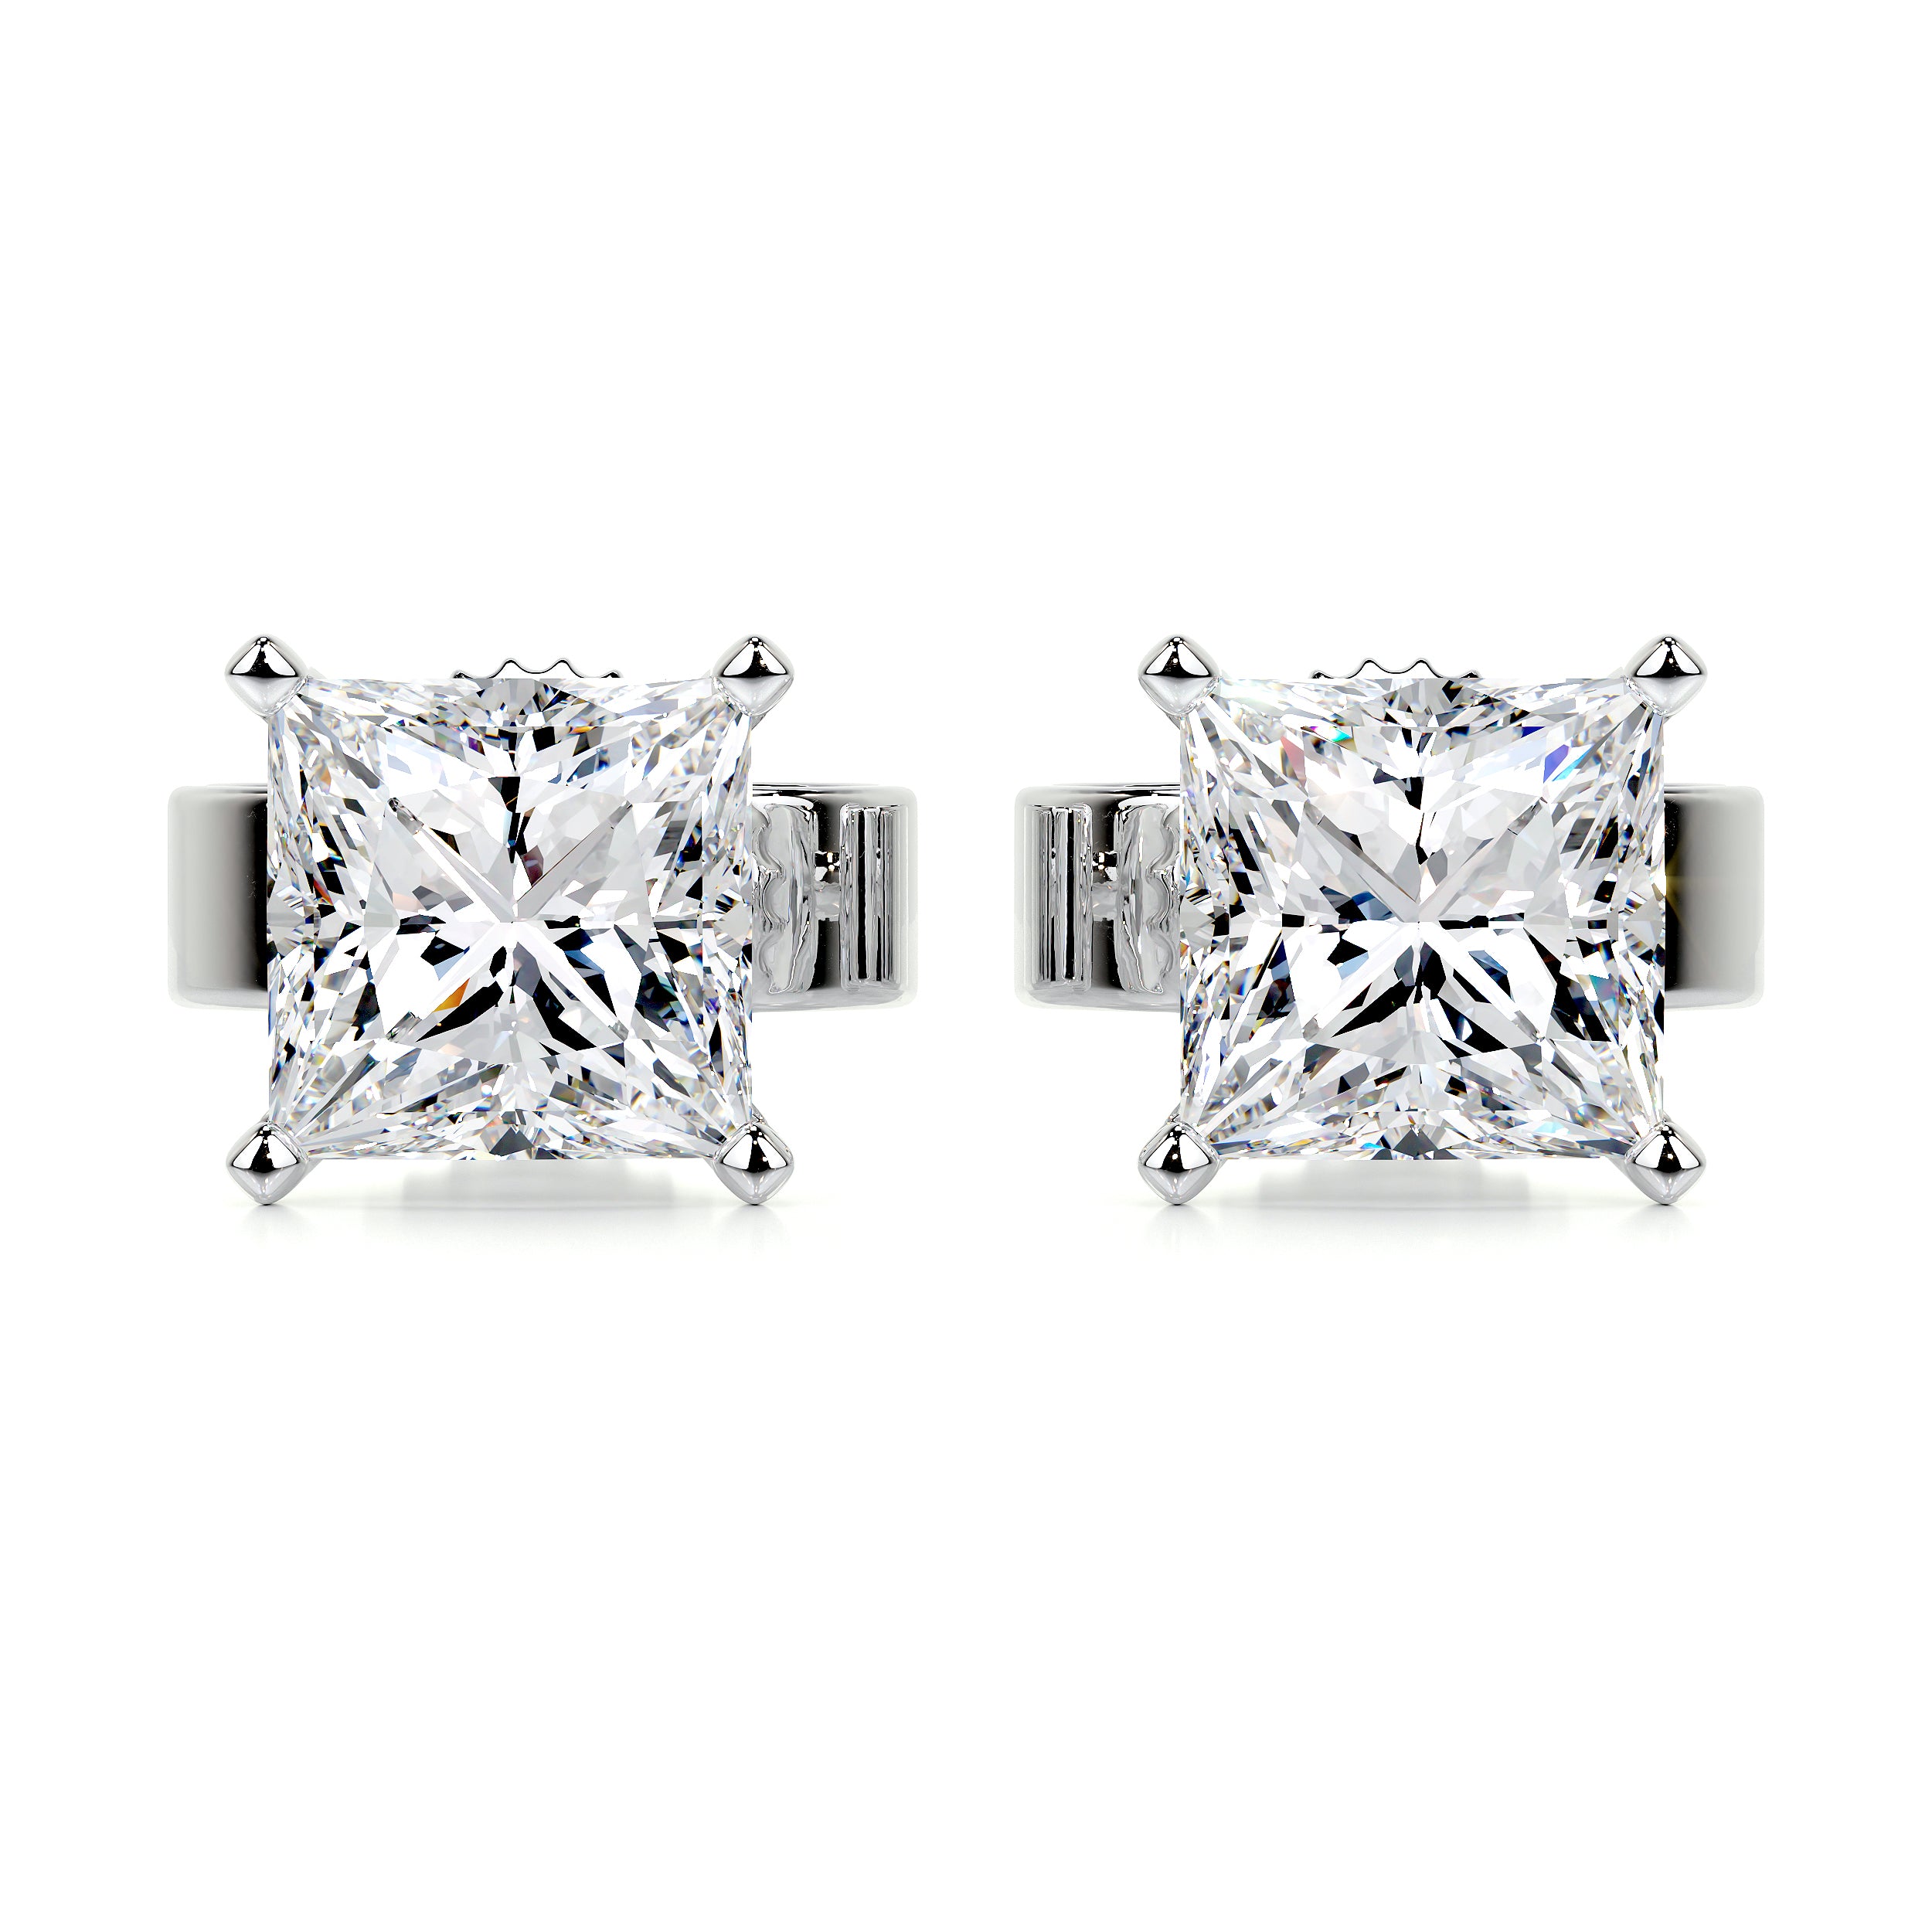 Jamie Diamond Earrings   (5 Carat) -18K White Gold